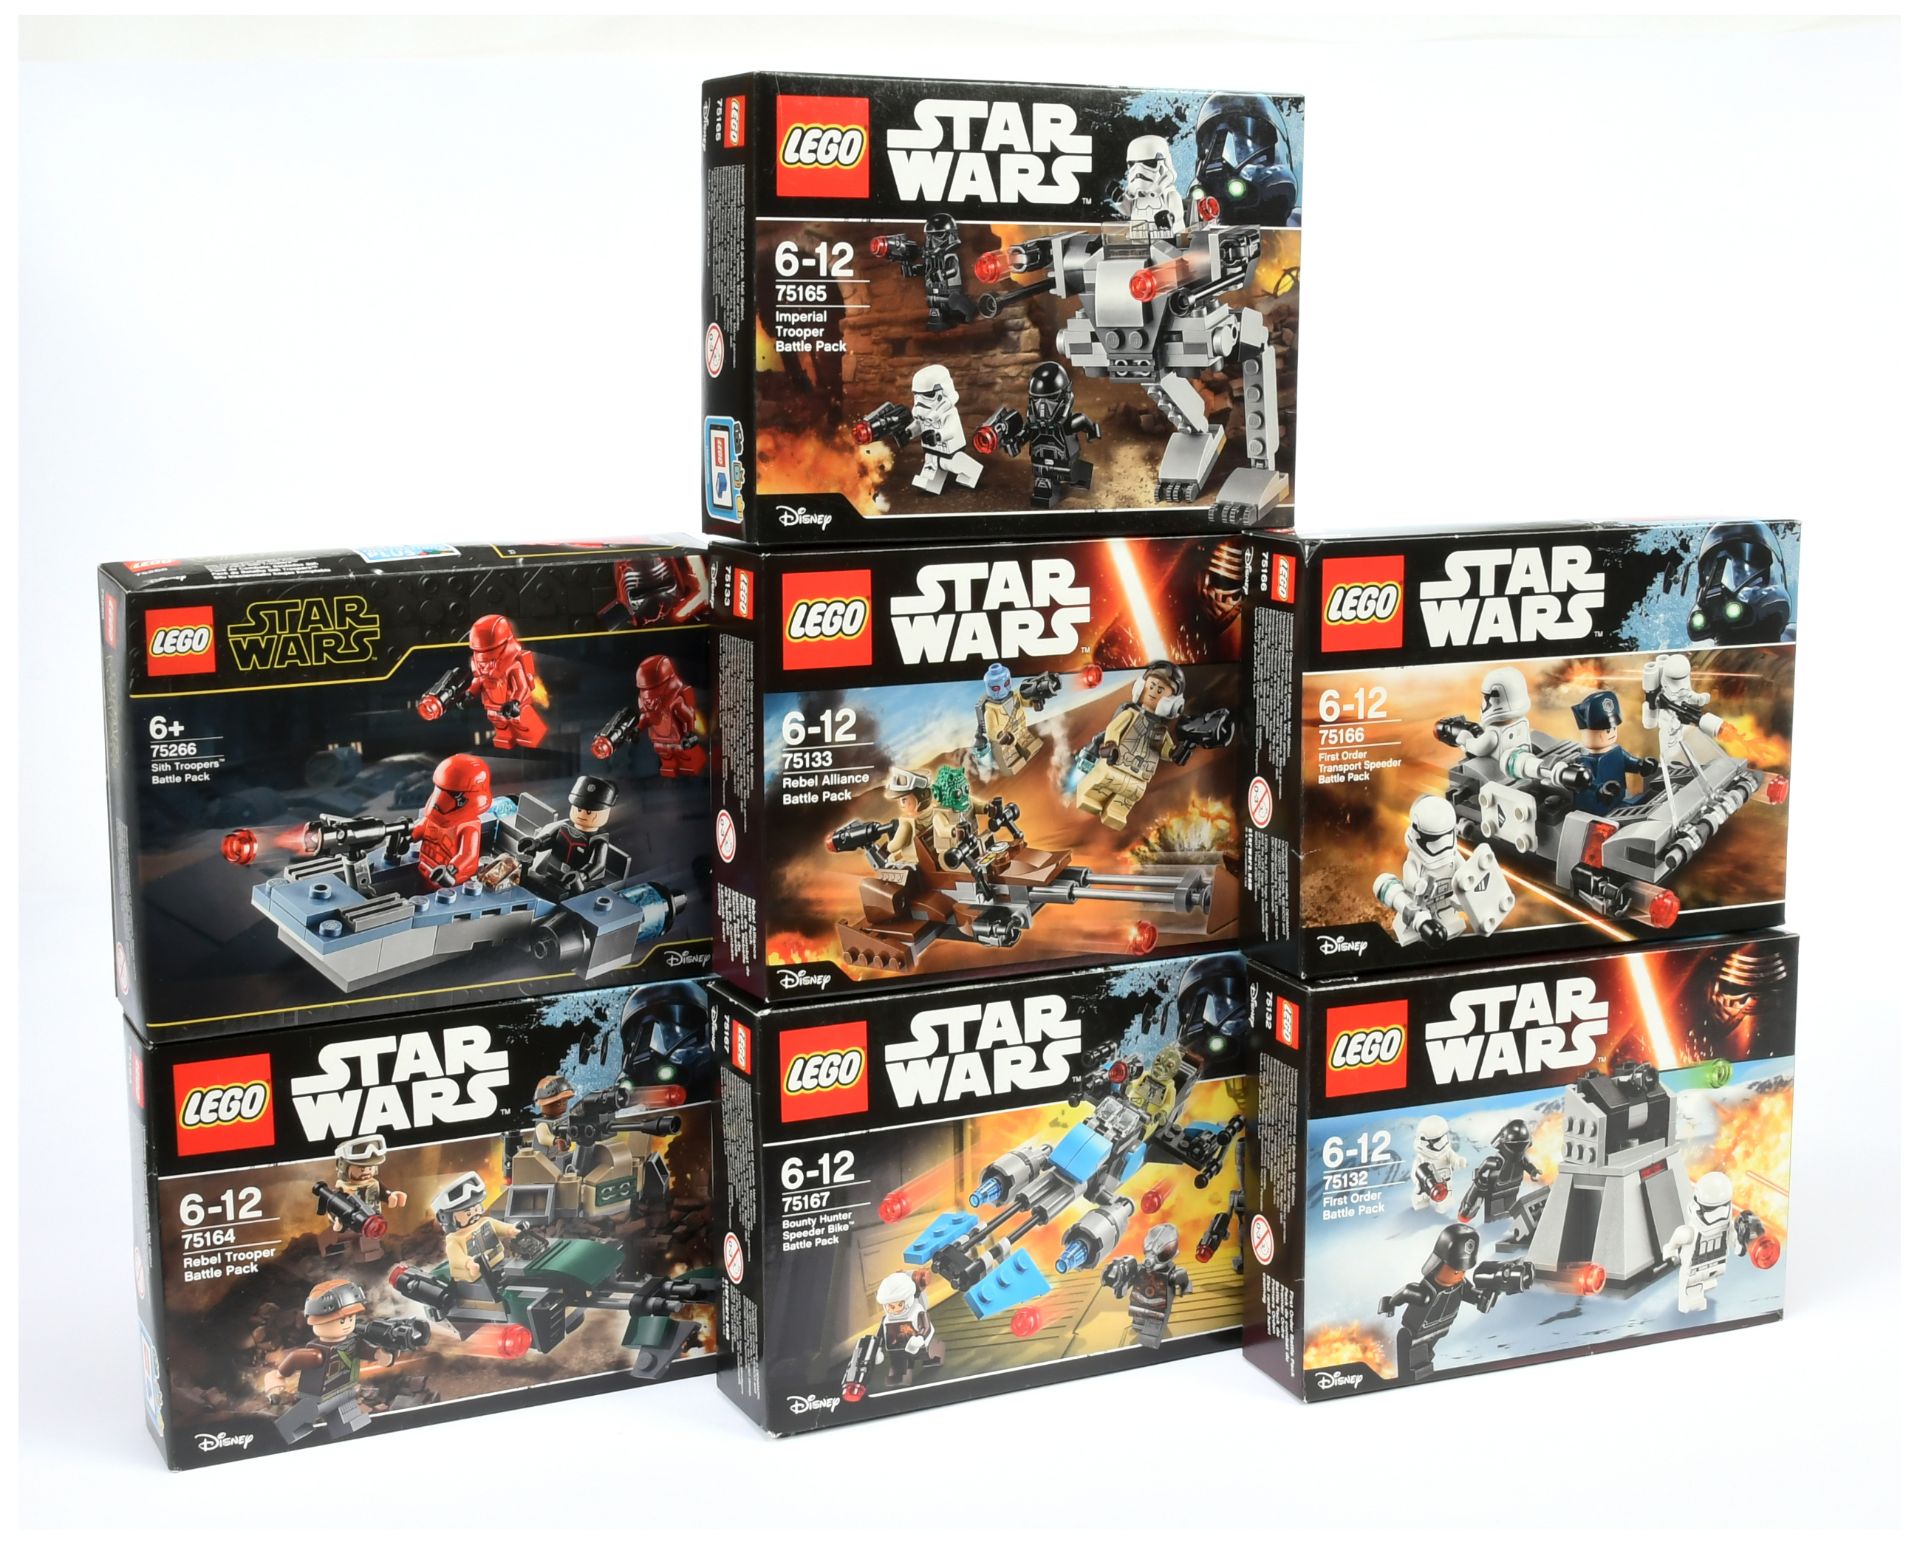 Lego Star Wars Group to include 75164 Rebel Trooper Battle Pack; 75167 Bounty Hunter Speeder Bike...